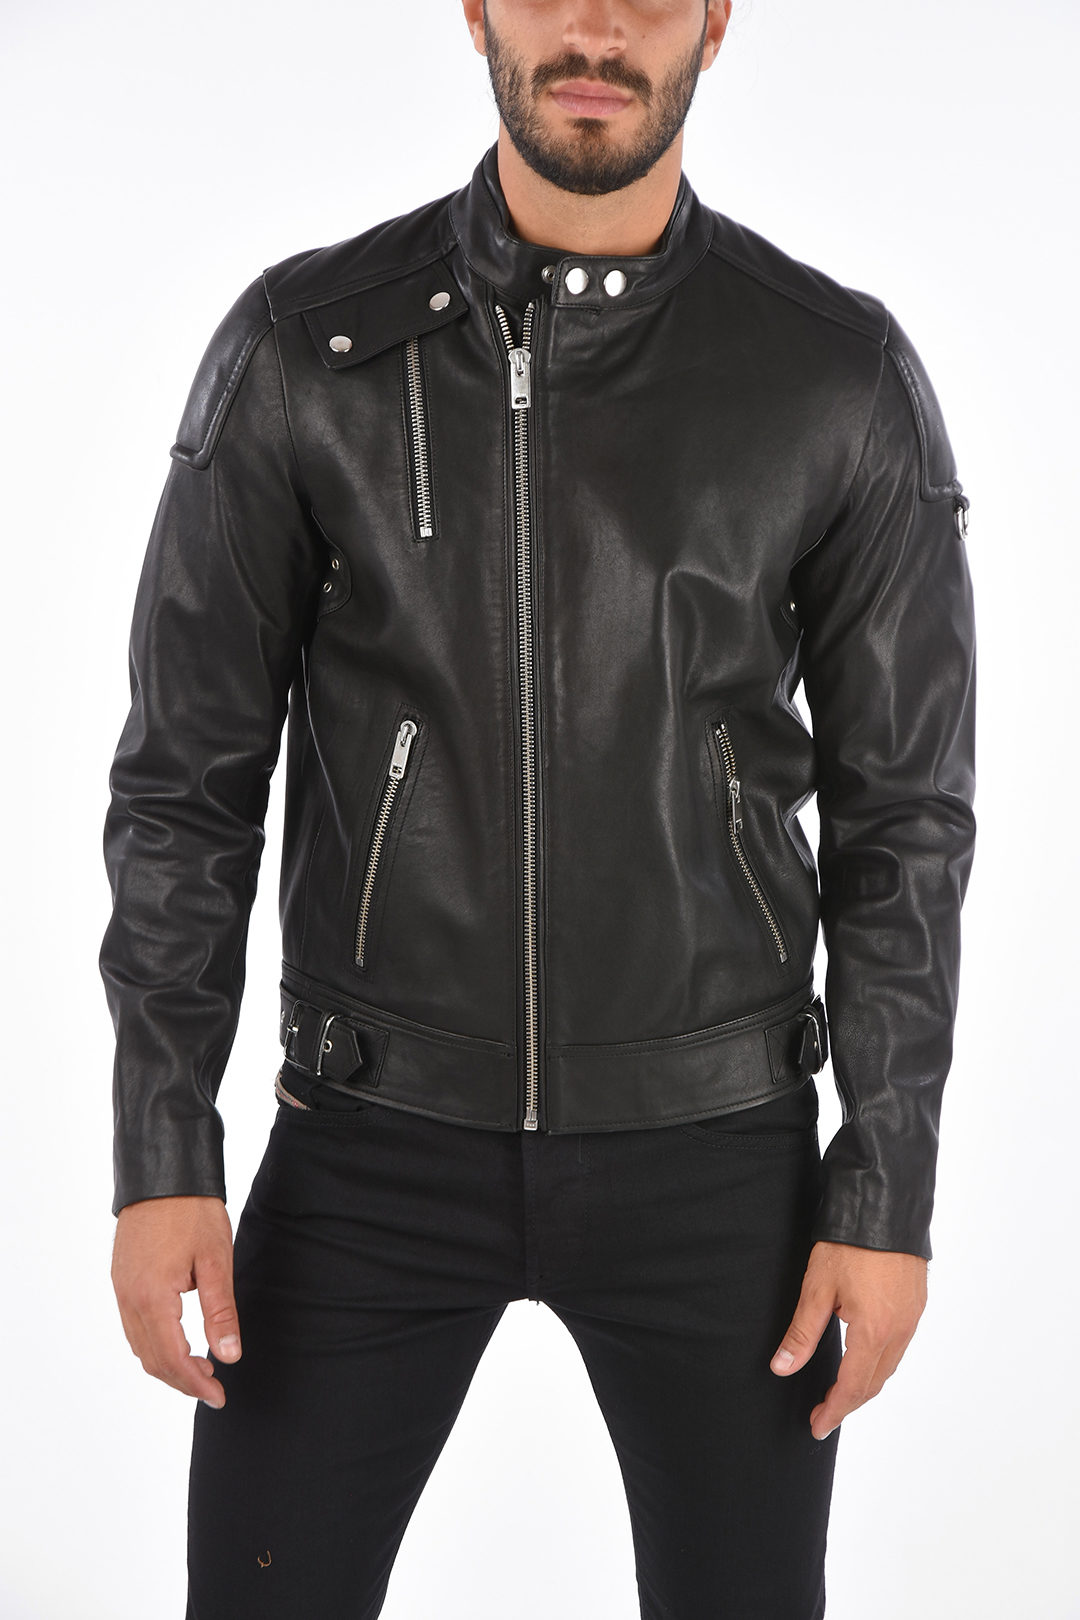 Bijwerken Uiterlijk schuur Diesel Leather L-CODY Jacket men - Glamood Outlet